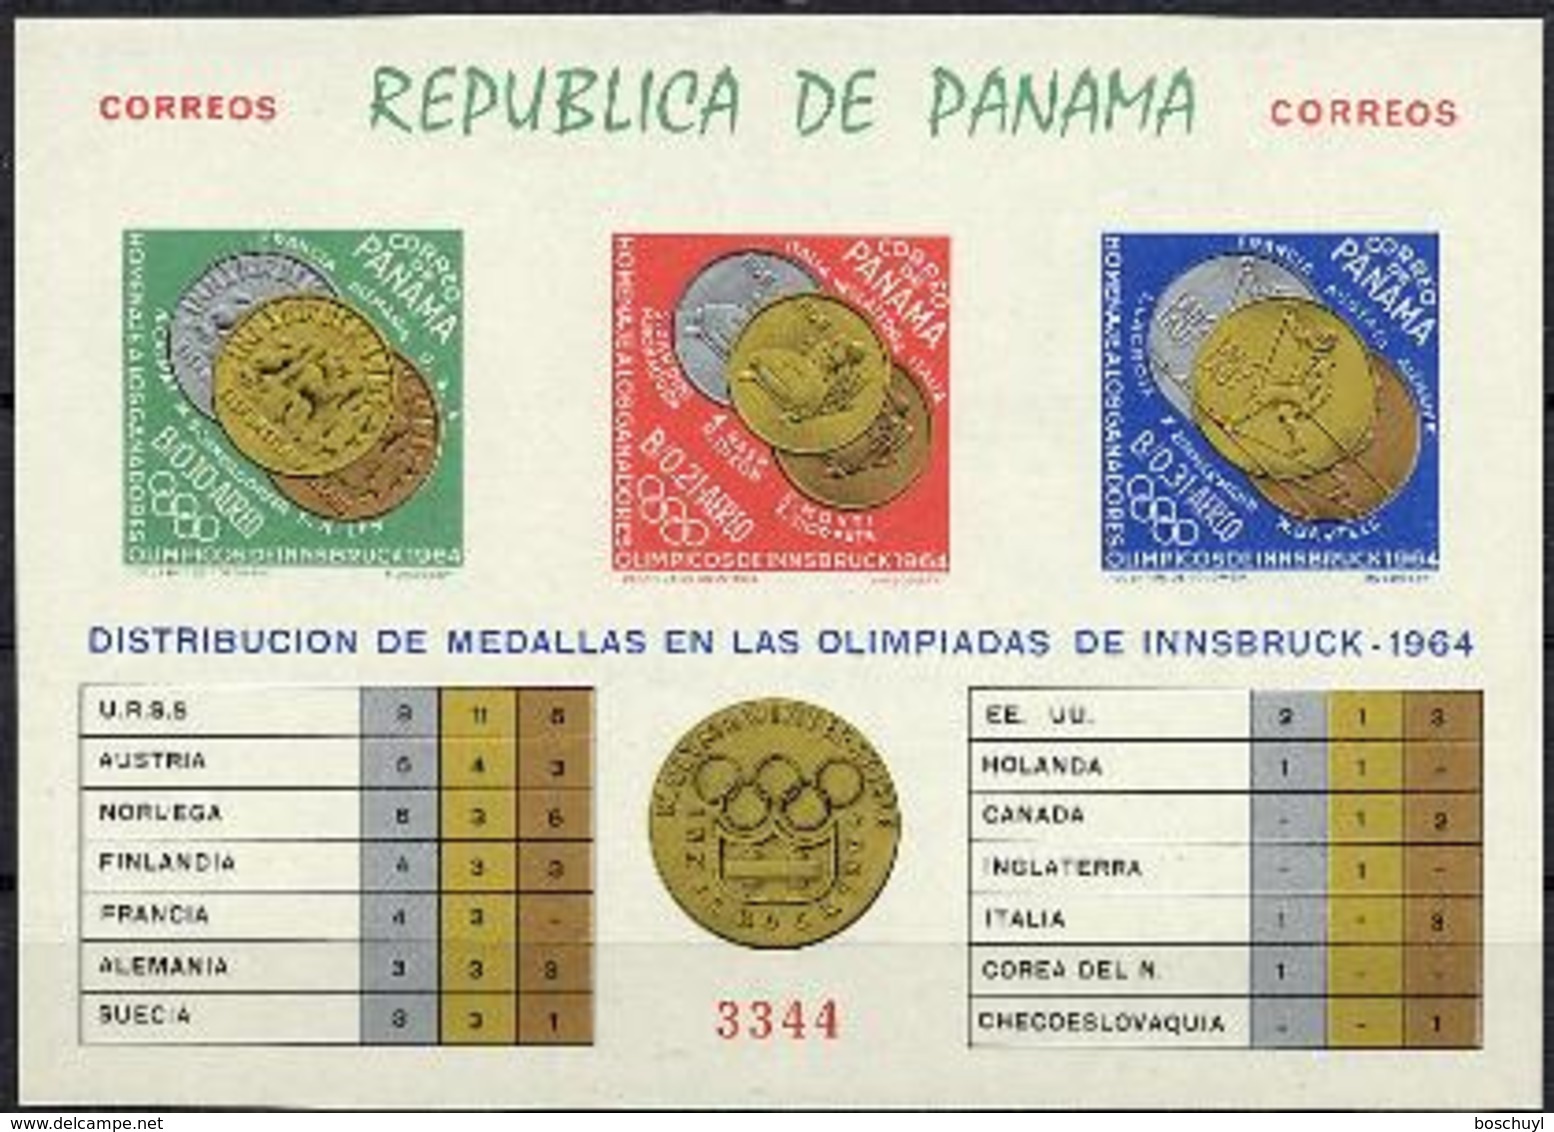 Panama, 1964, Olympic Winter Games Innsbruck, Medal Winners, MNH Imperforated, Michel Block 28B - Panama